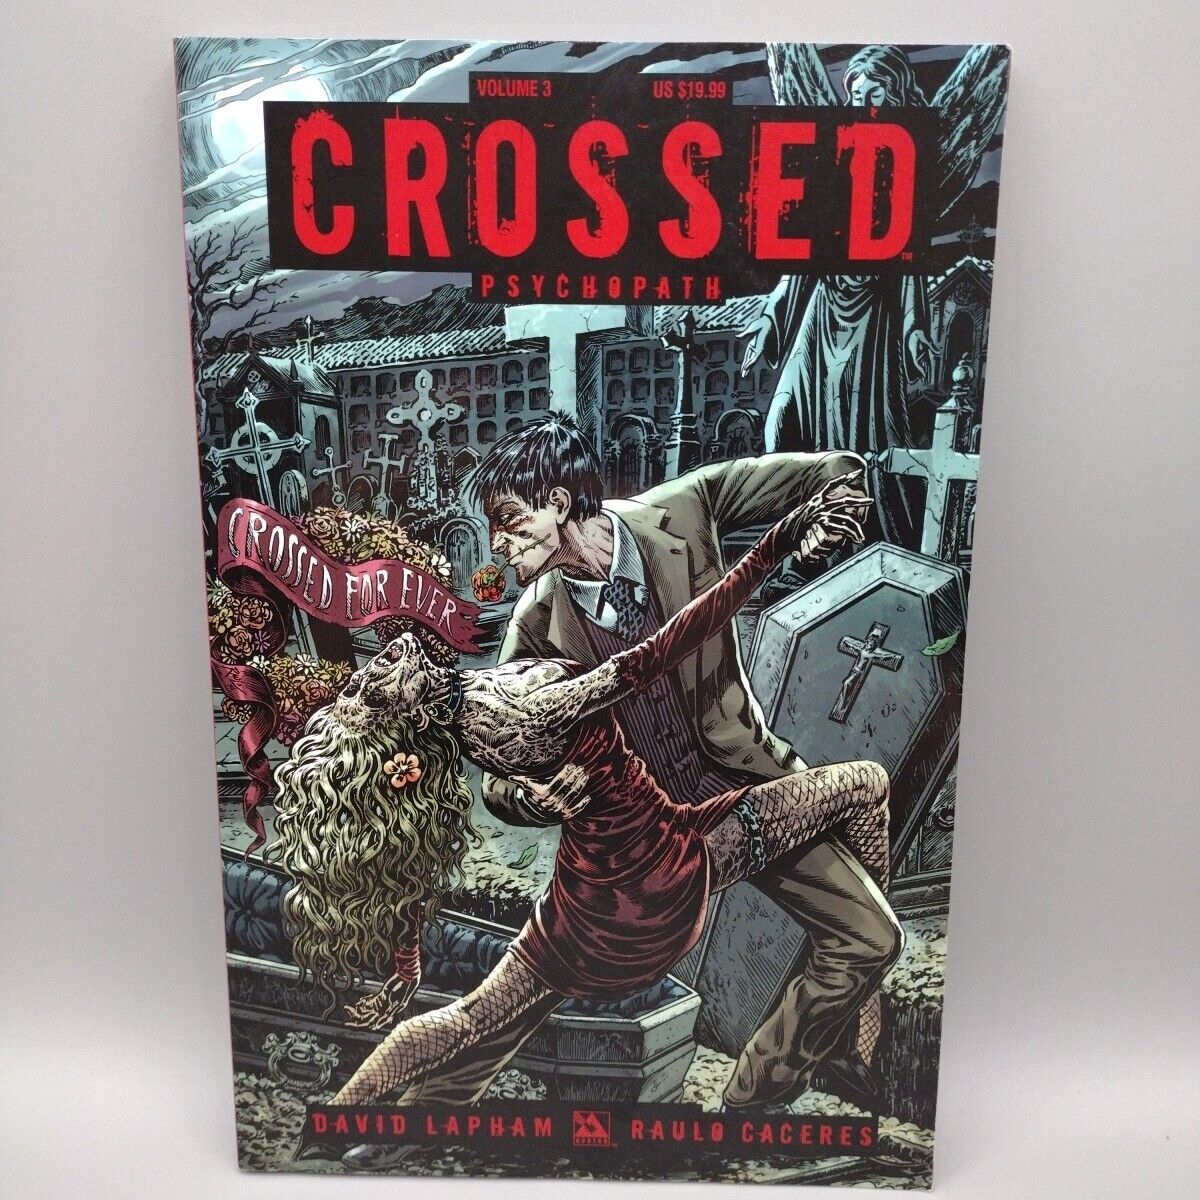 Crossed Vol 3: Psychopath David Lapham Avatar Press 2012 Paperback Graphic Novel